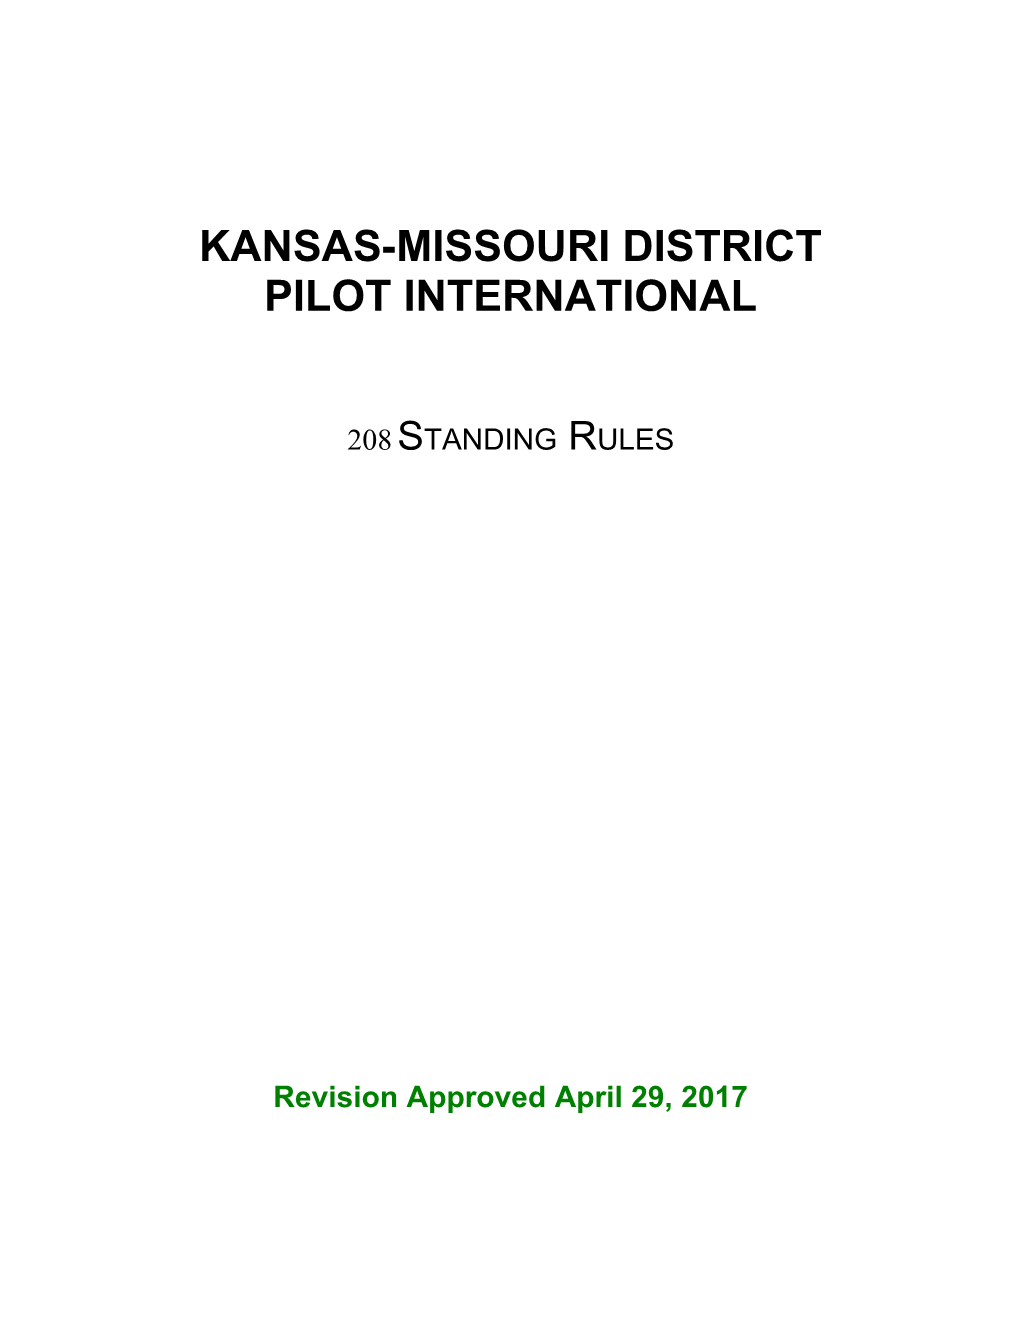 Kansas-Missouri District